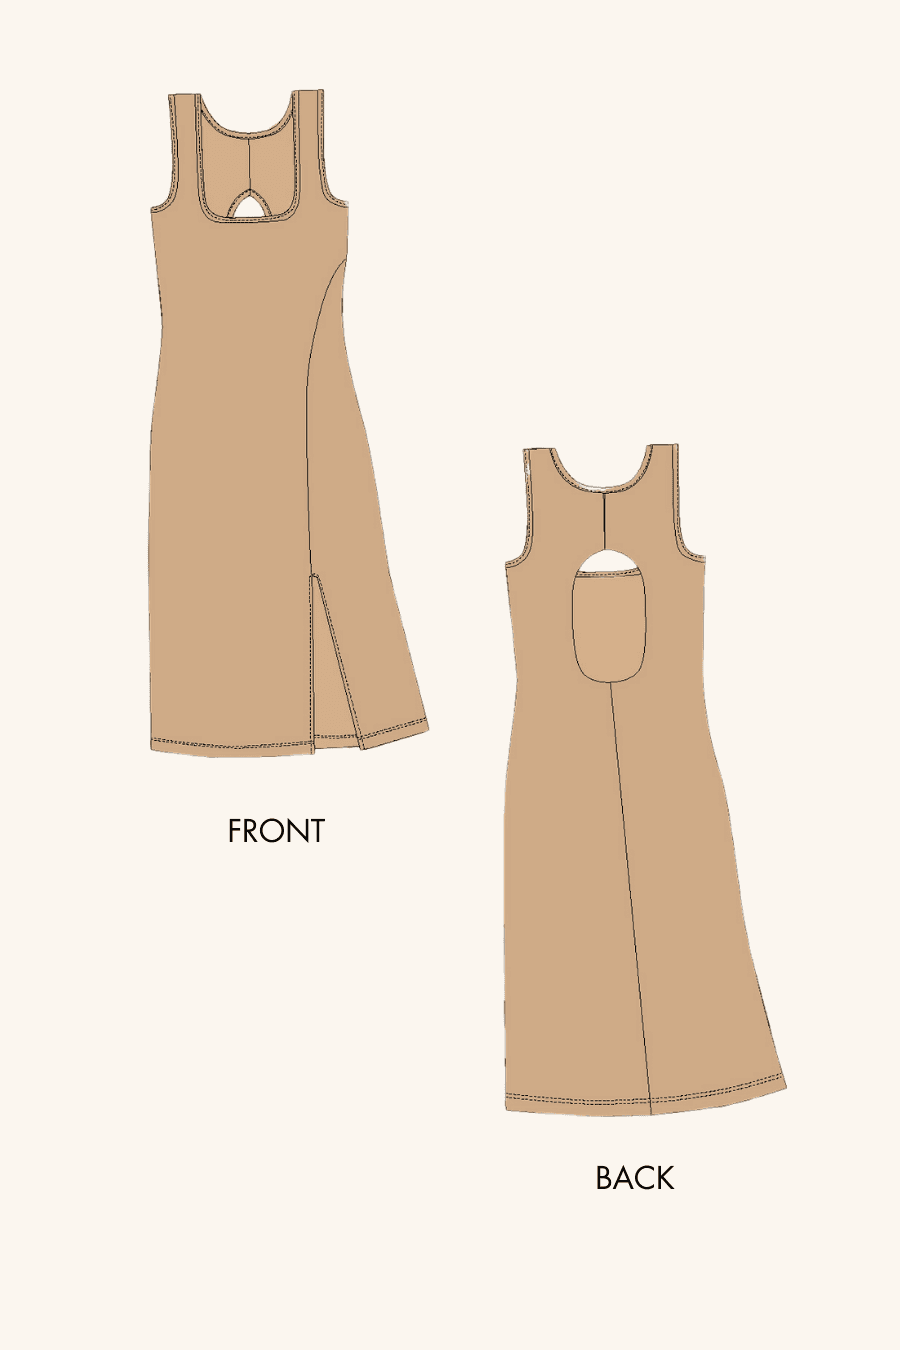 'Pamela' Cut Out Dress Sewing Pattern